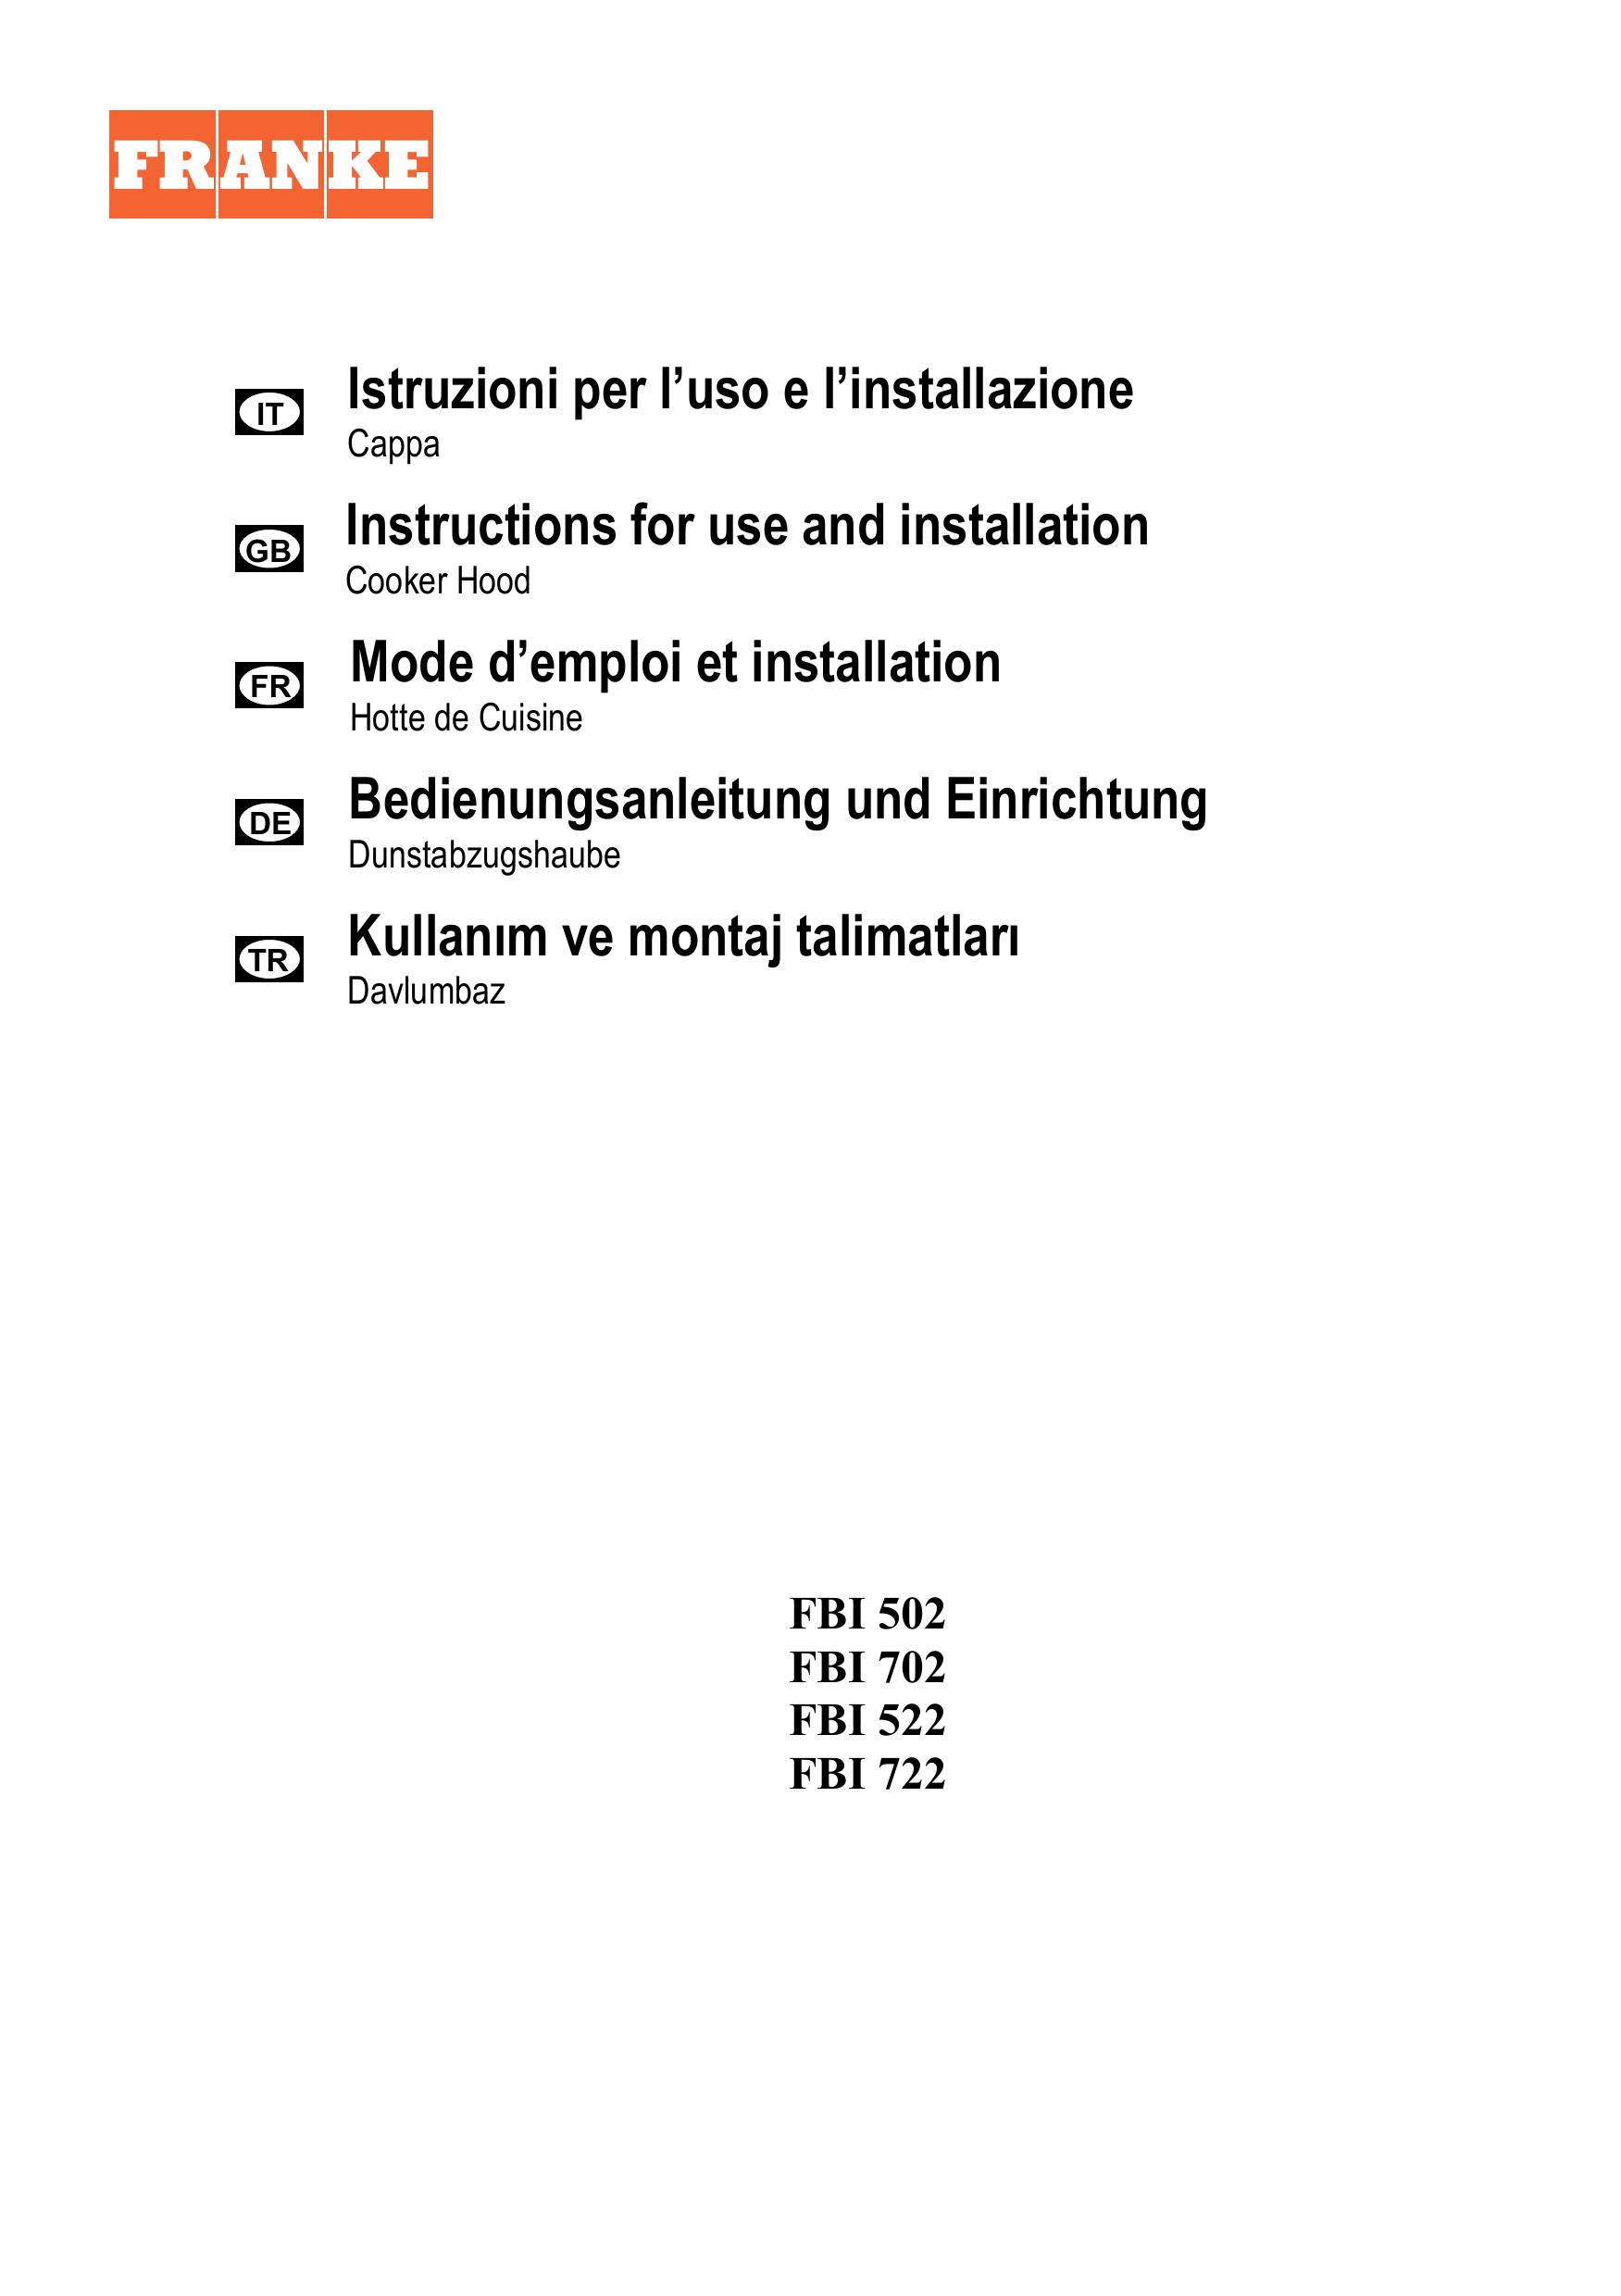 Franke Consumer Products FBI 722 Ventilation Hood User Manual